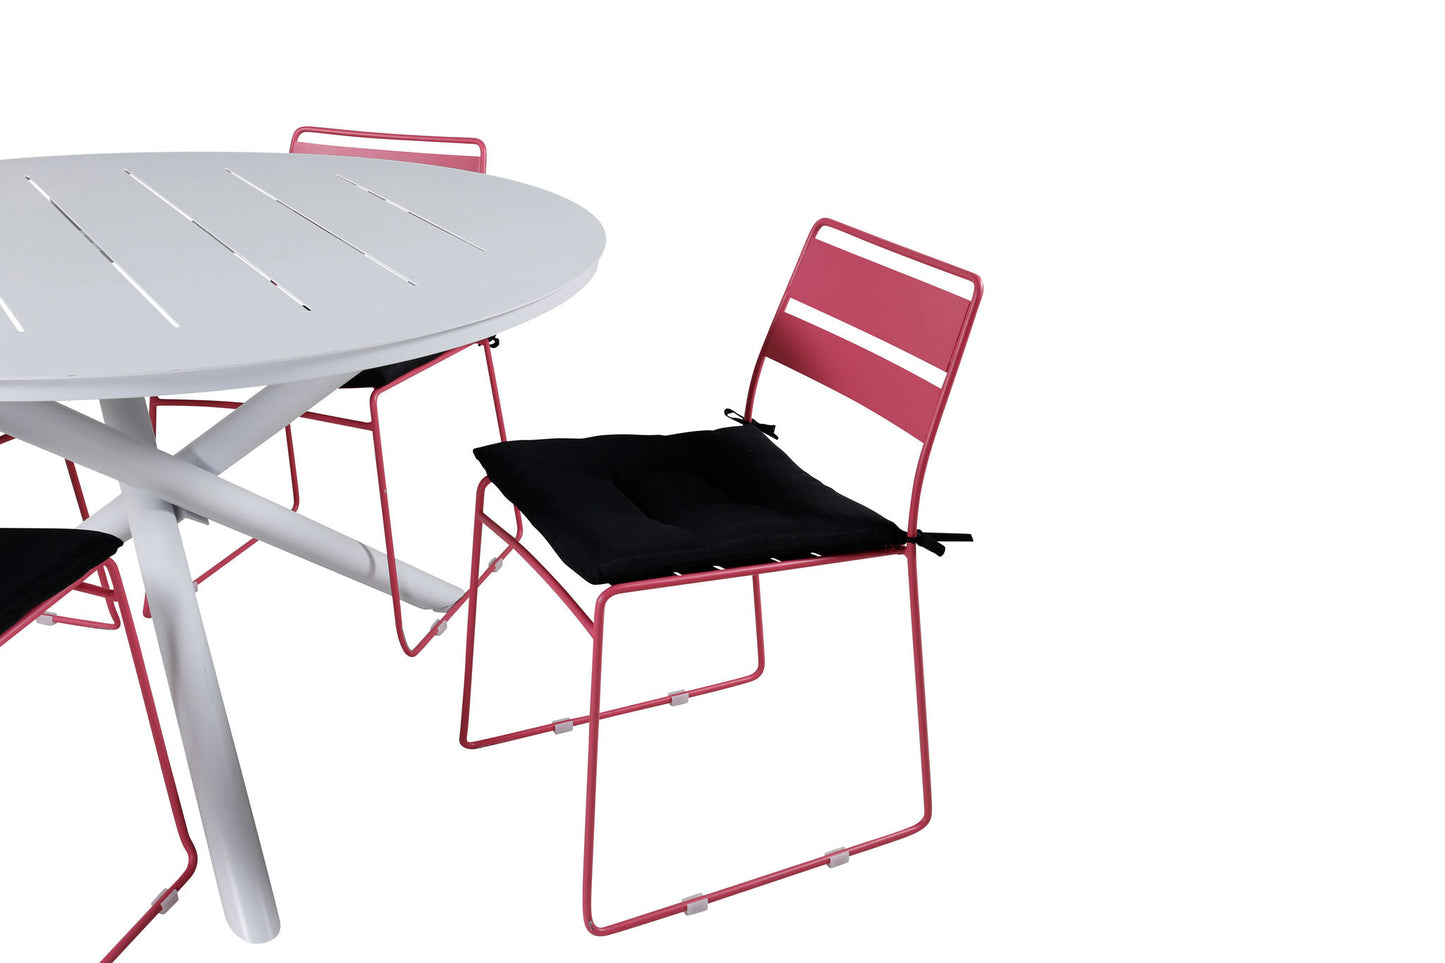 Alma - Spisebord, Hvid Alu - ø120cm+Lia Spisebordsstol - Pink